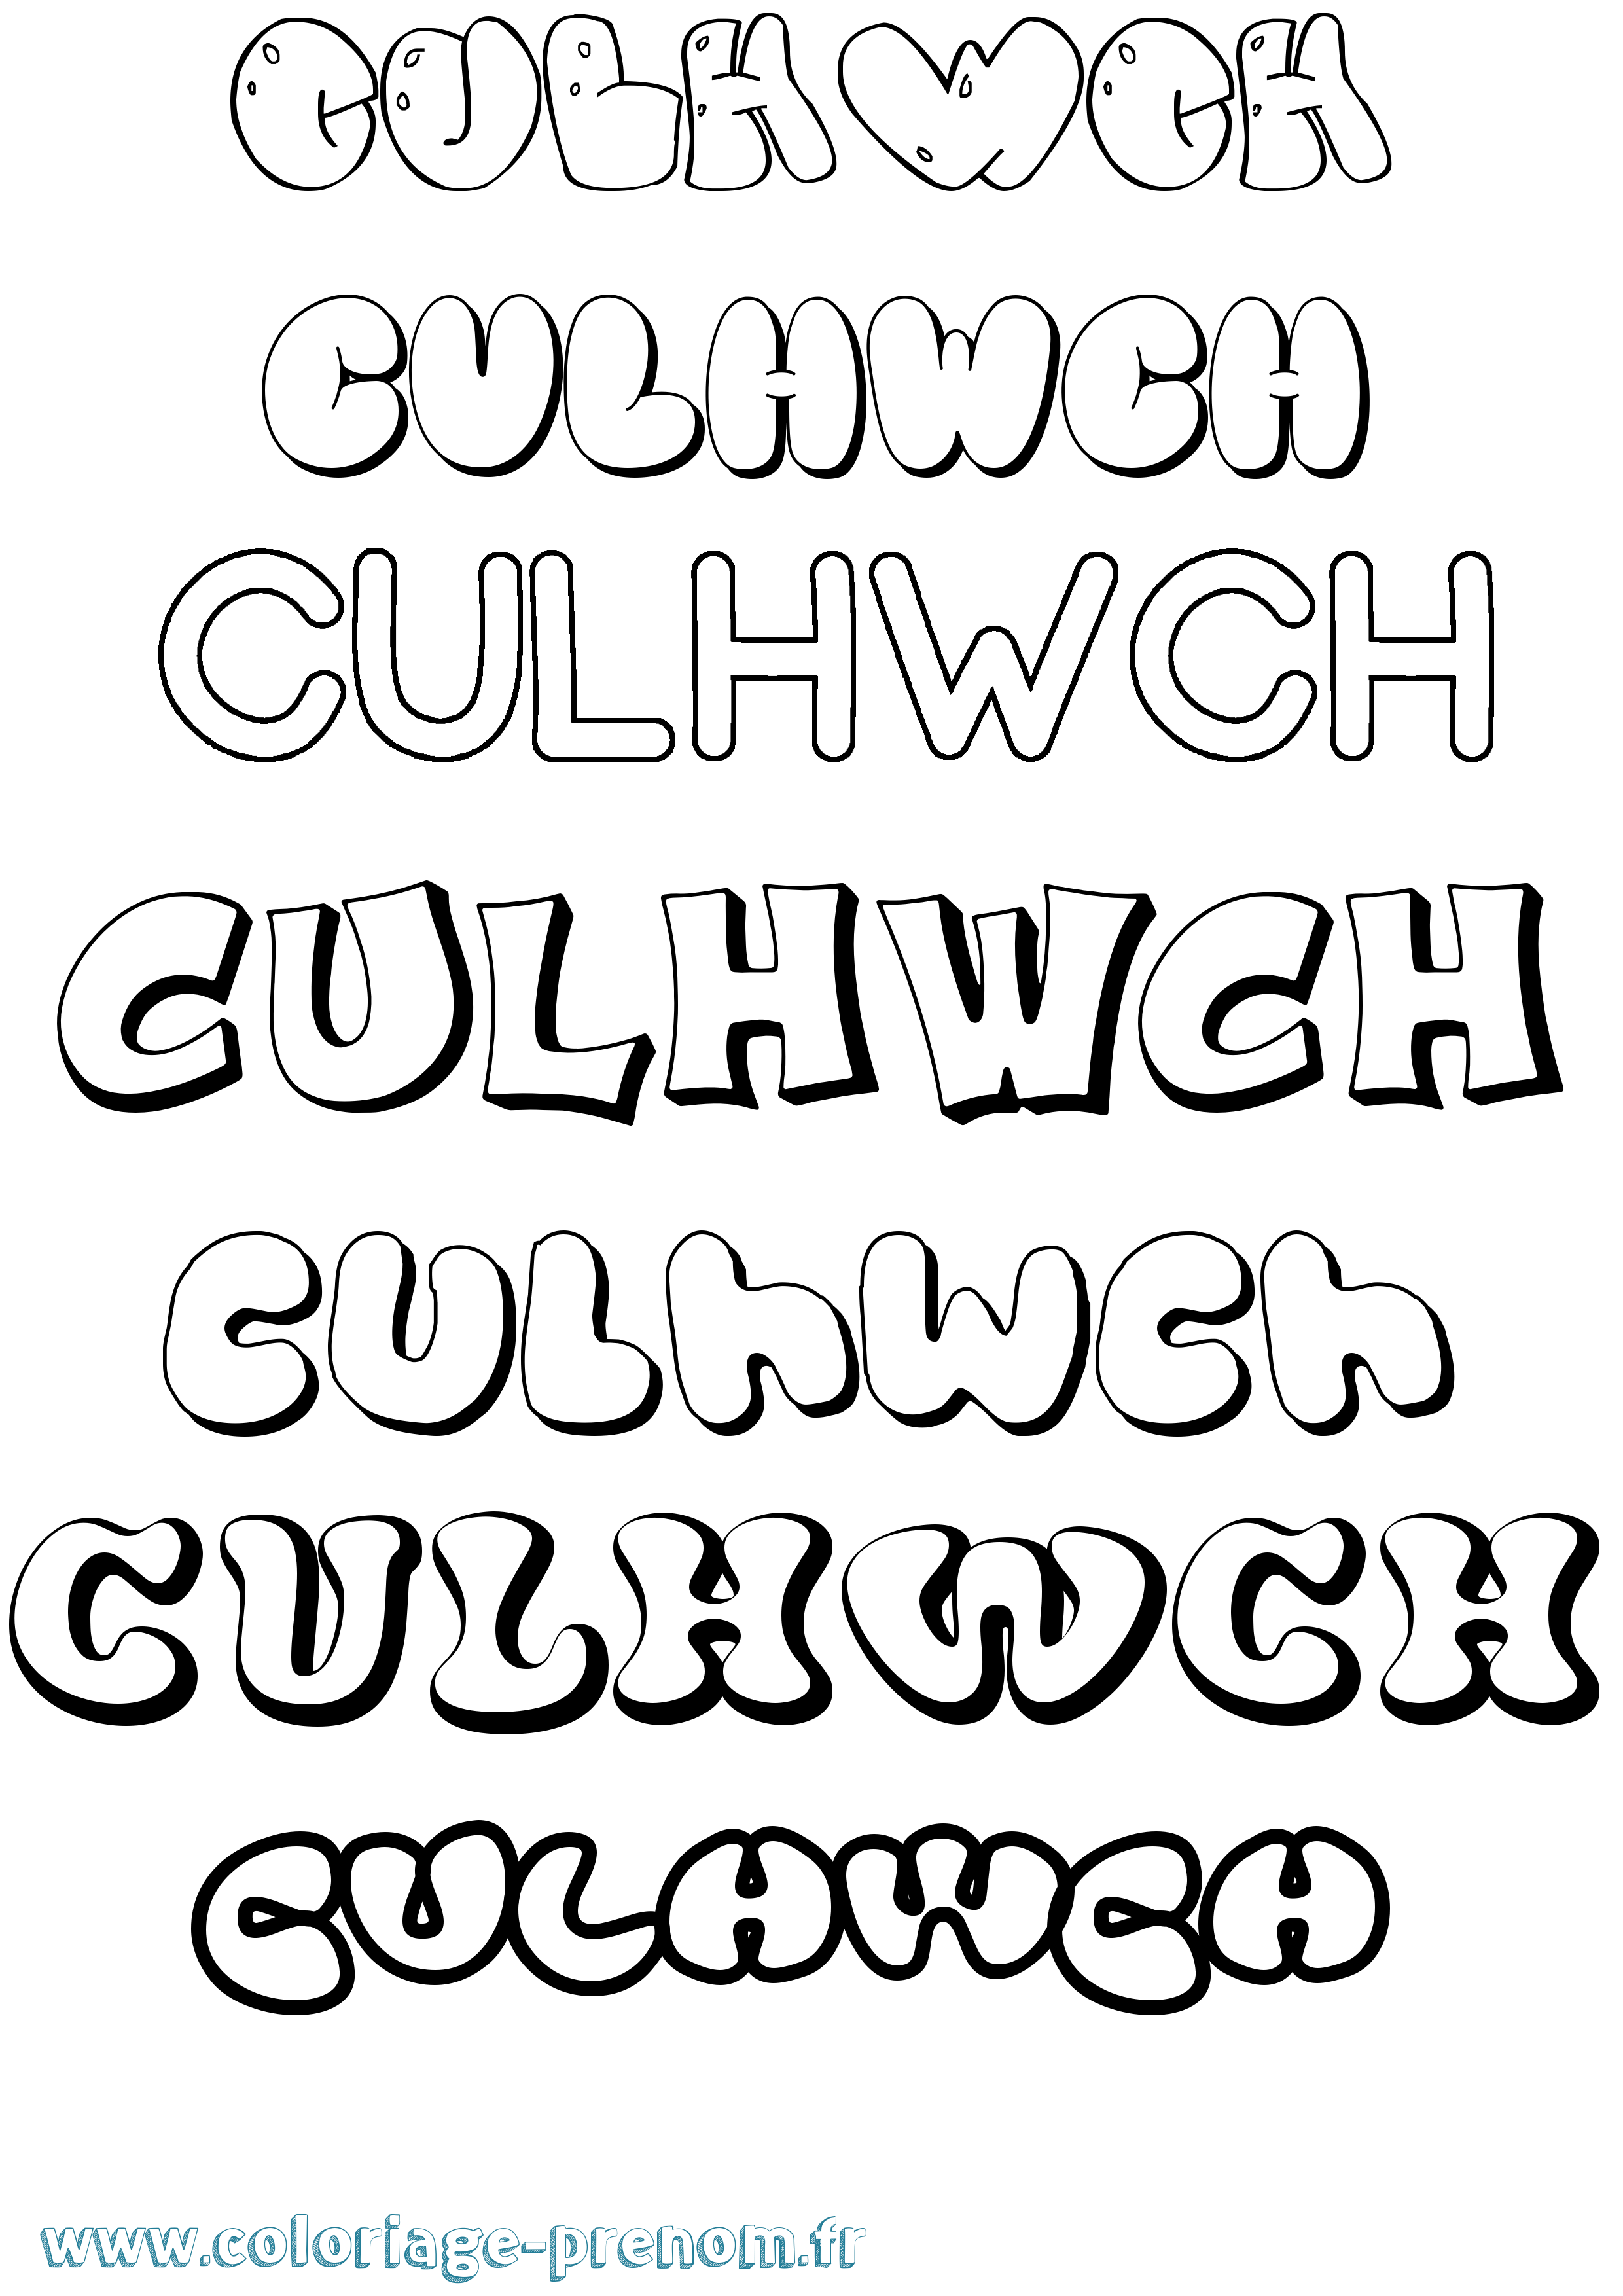 Coloriage prénom Culhwch Bubble